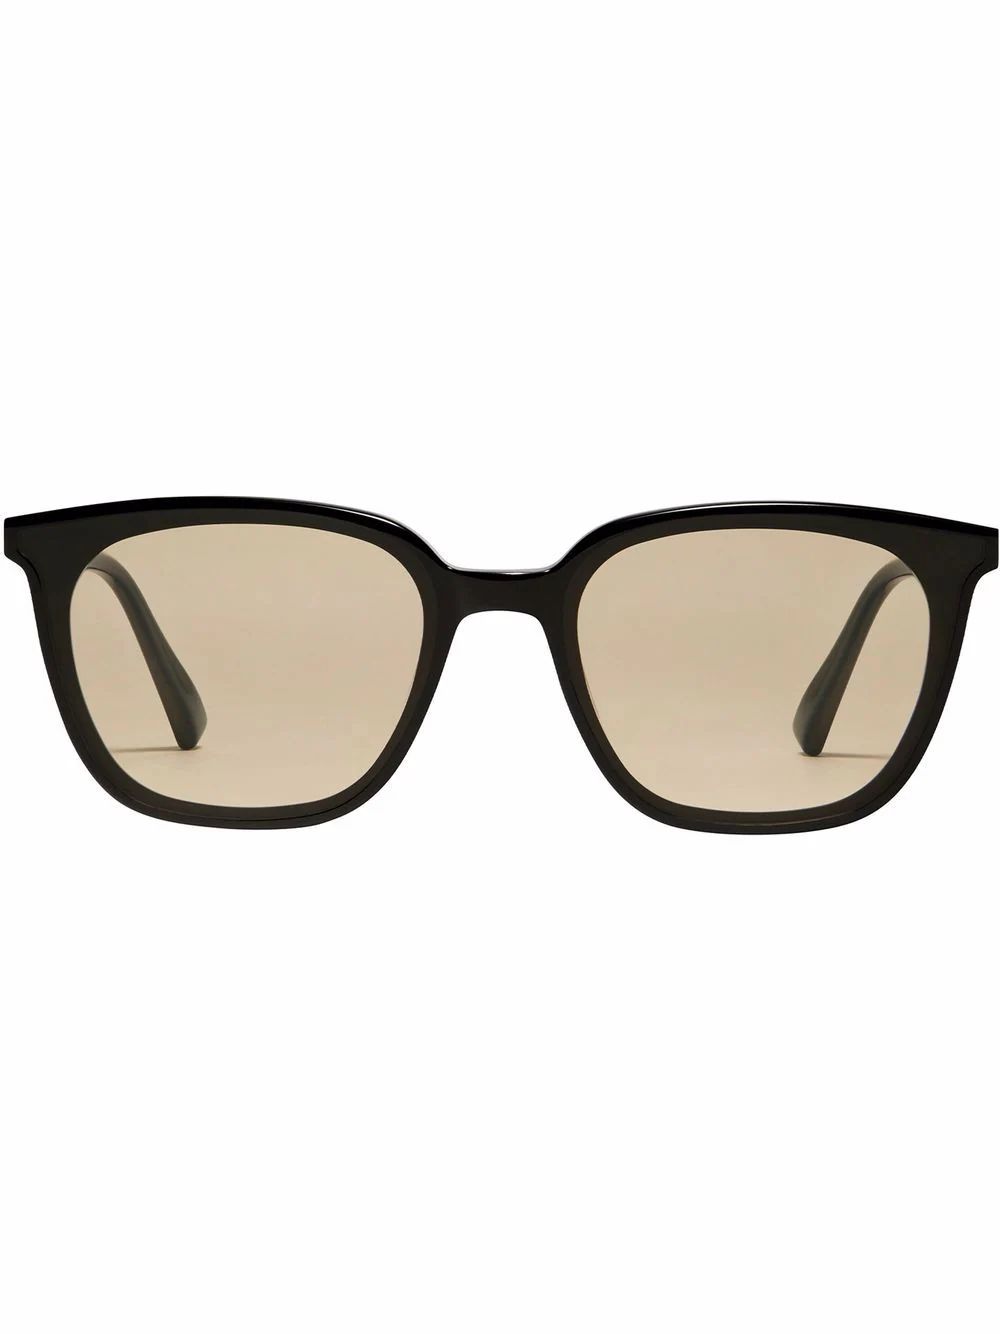 Lilit 01 curved square sunglasses | Farfetch Global